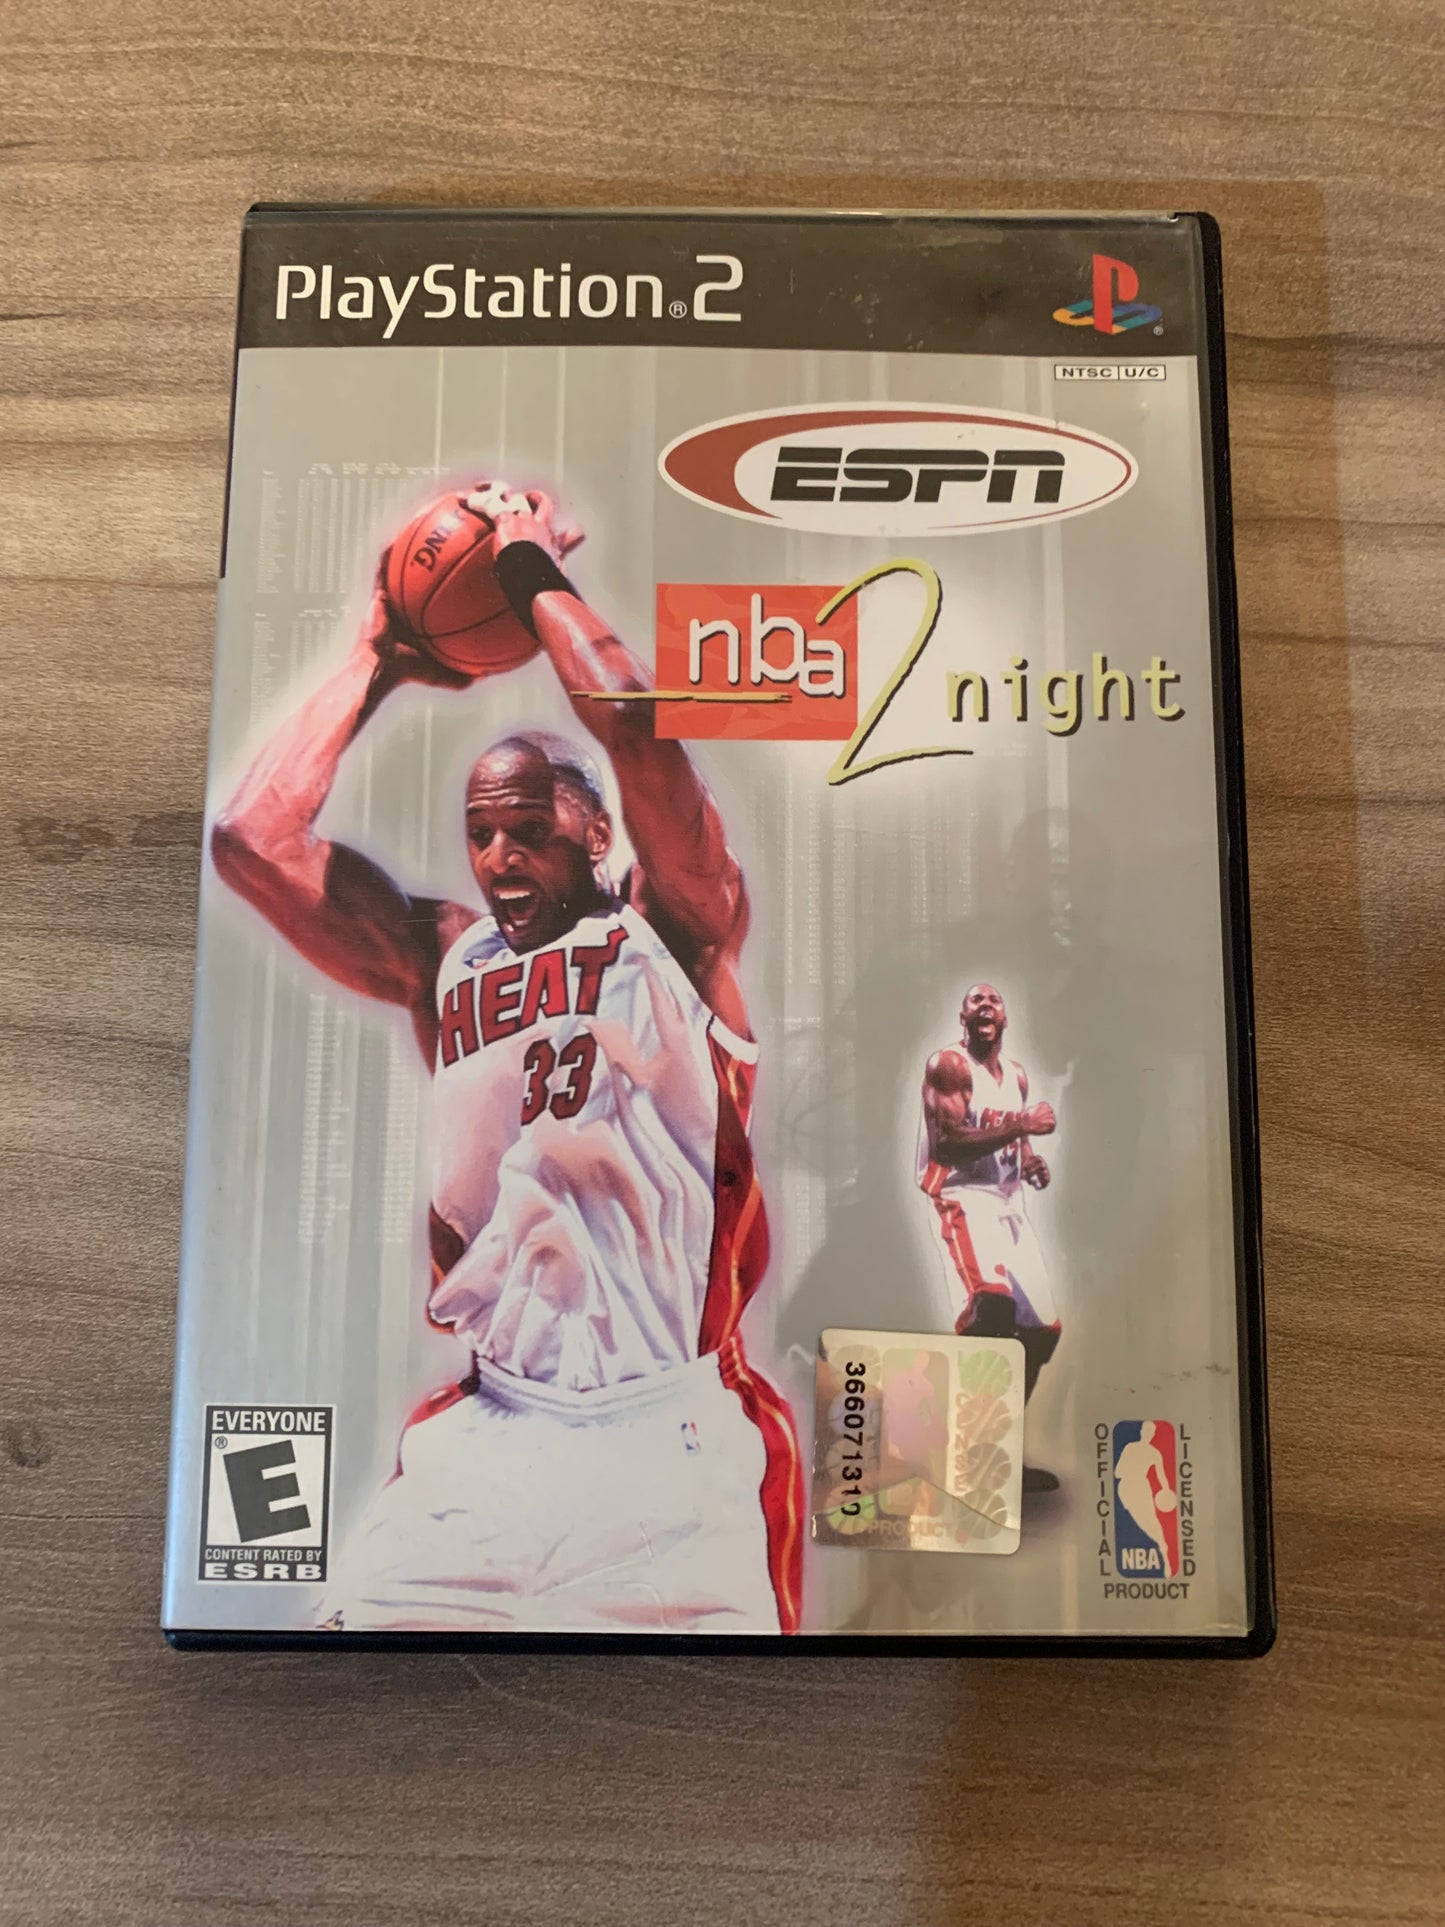 SONY PLAYSTATiON 2 [PS2] | ESPN NBA 2 NiGHT